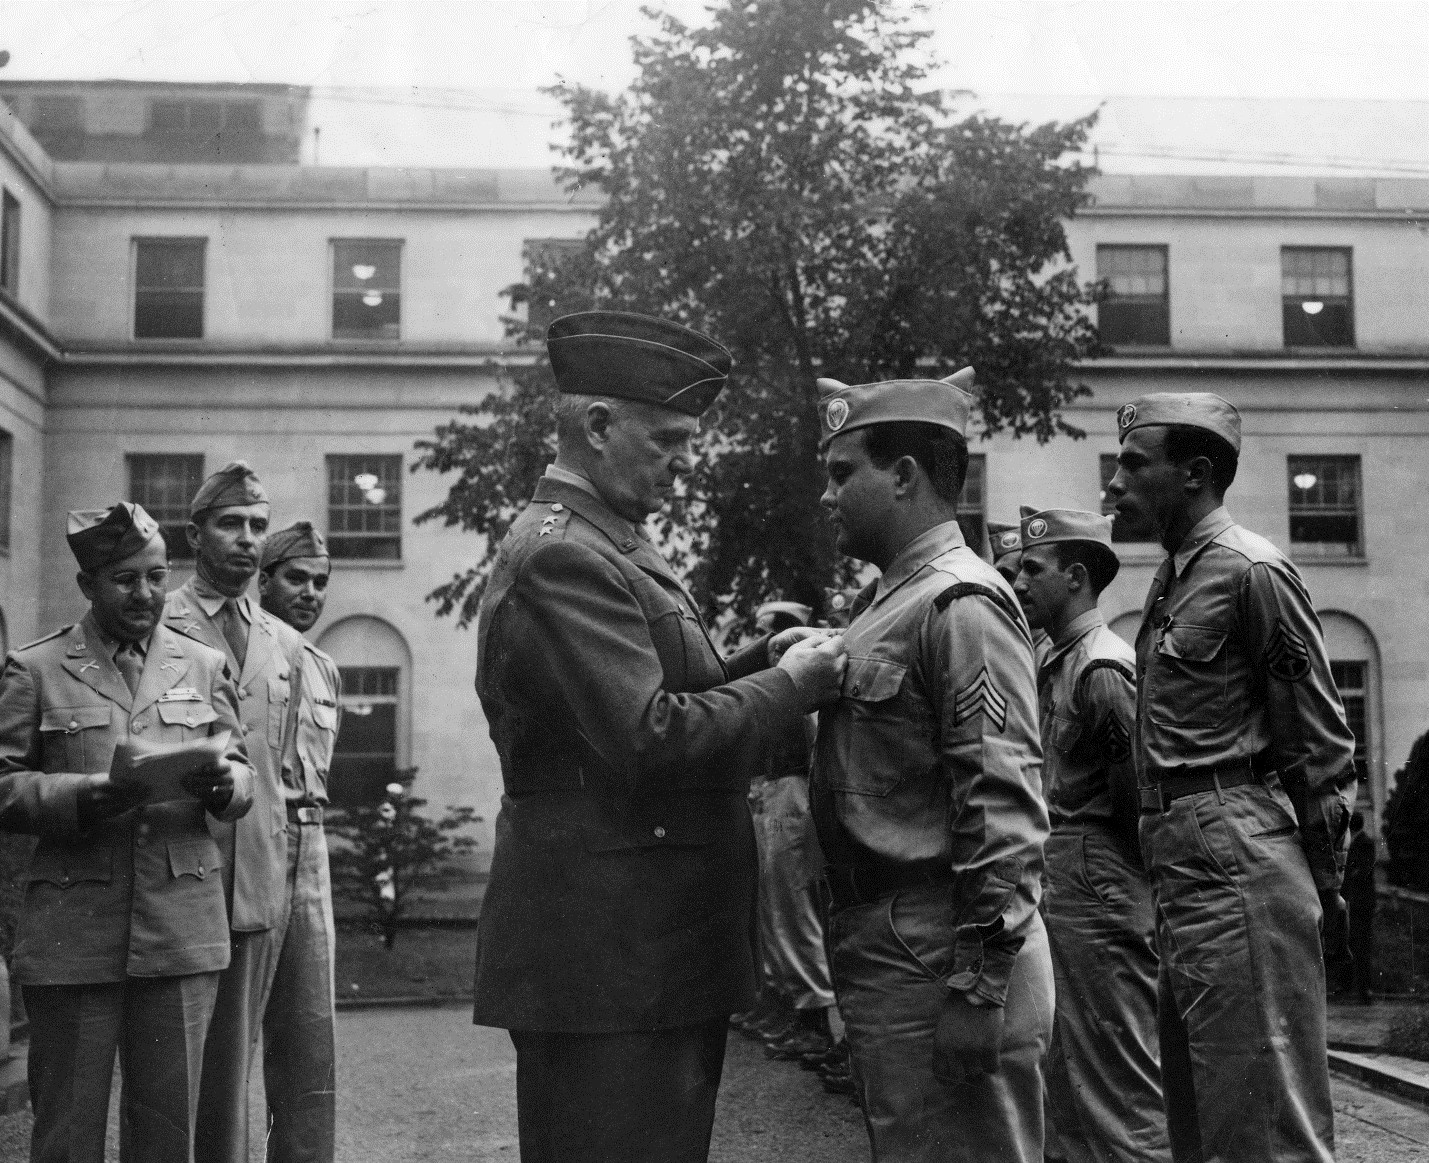 Sgt. Caesar Civitella receiving an award from Maj. Gen. William “Wild Bill” Donovan after World War II.  Courtesy photo.